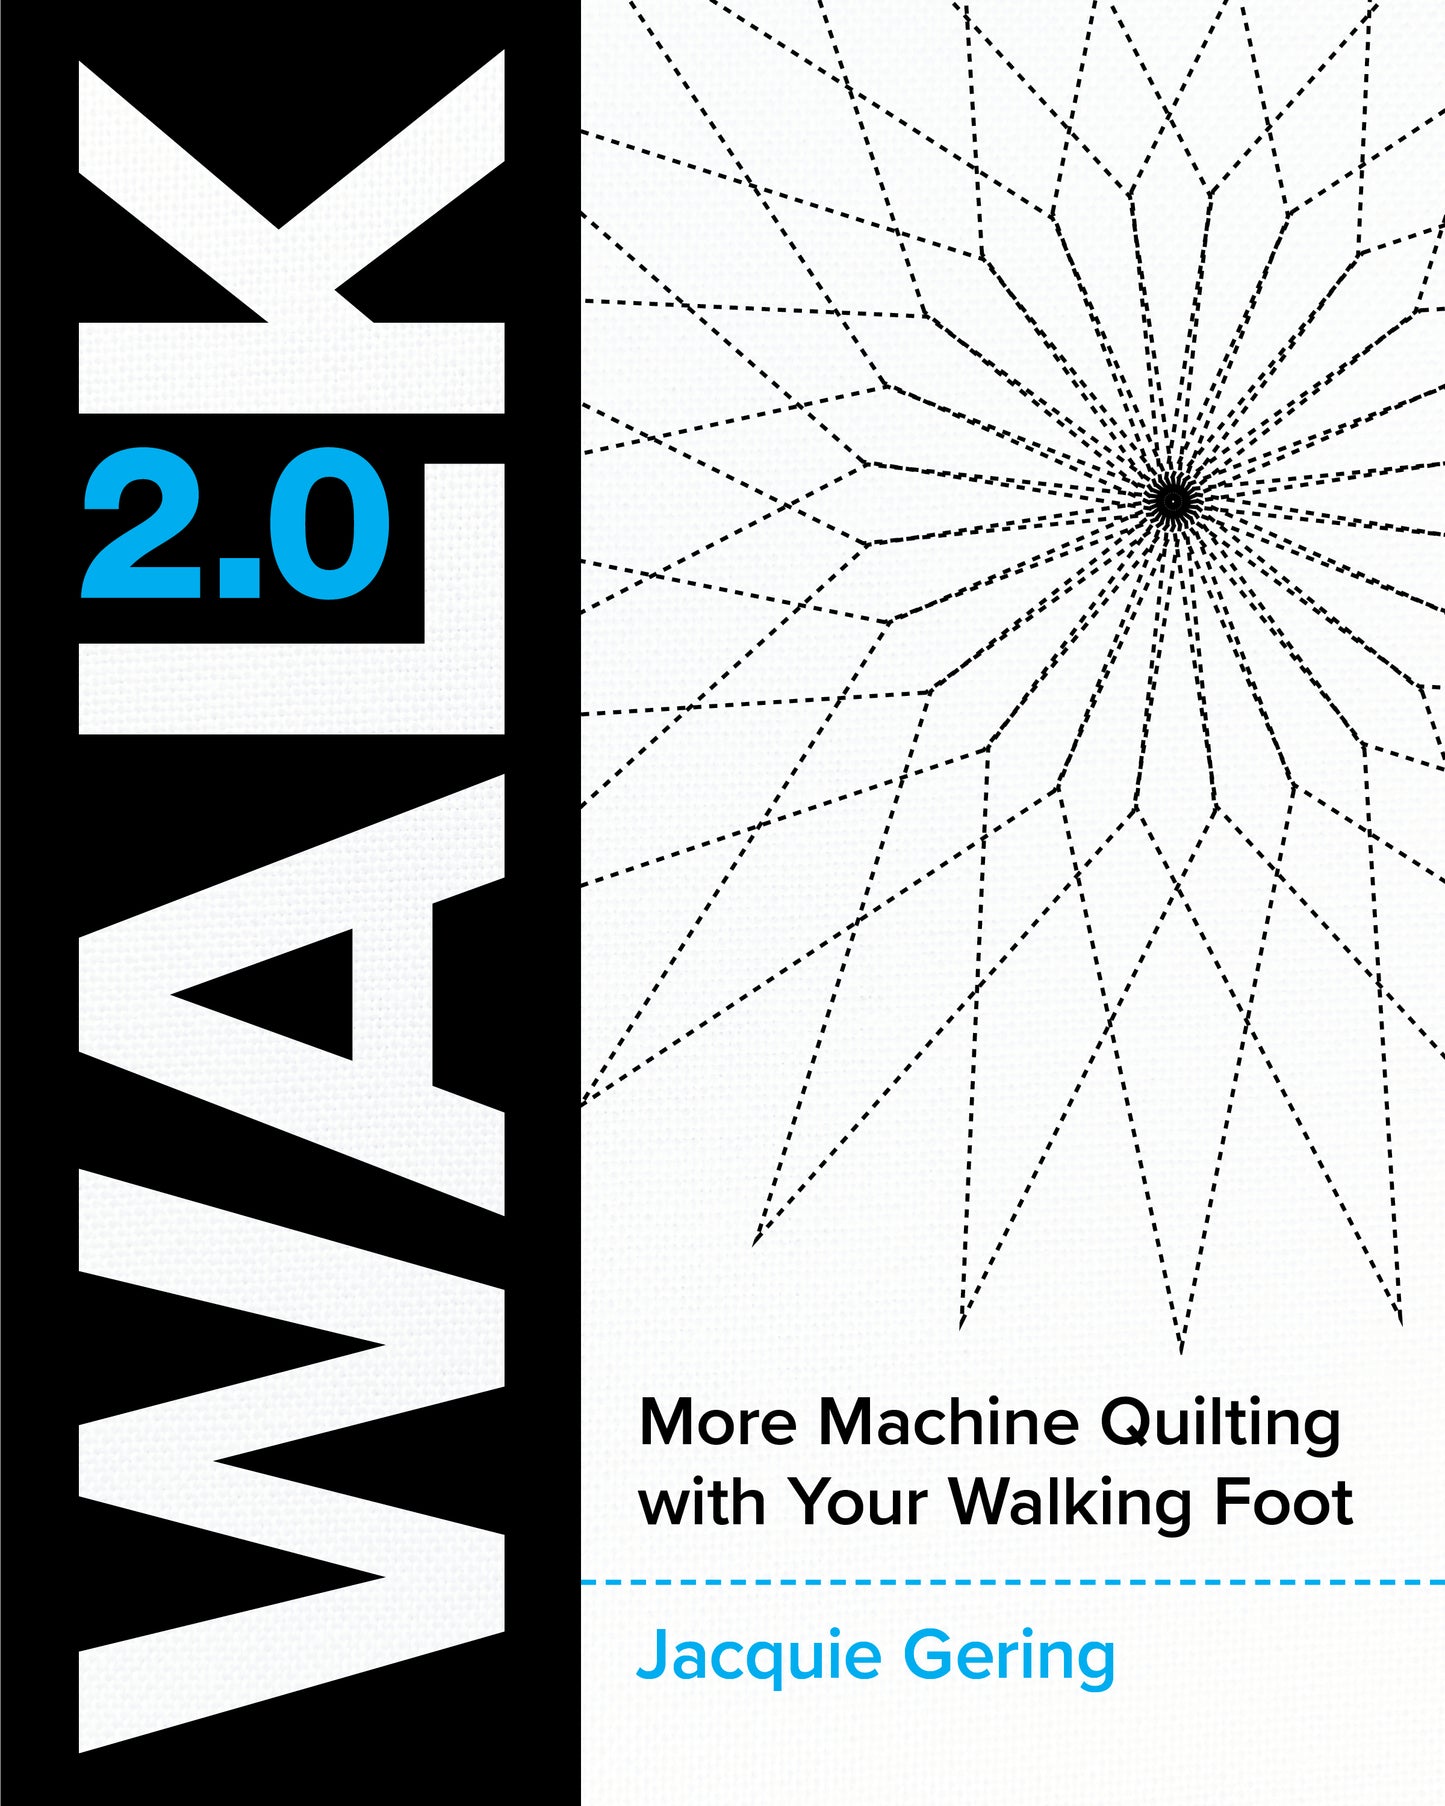 Walk 2.0